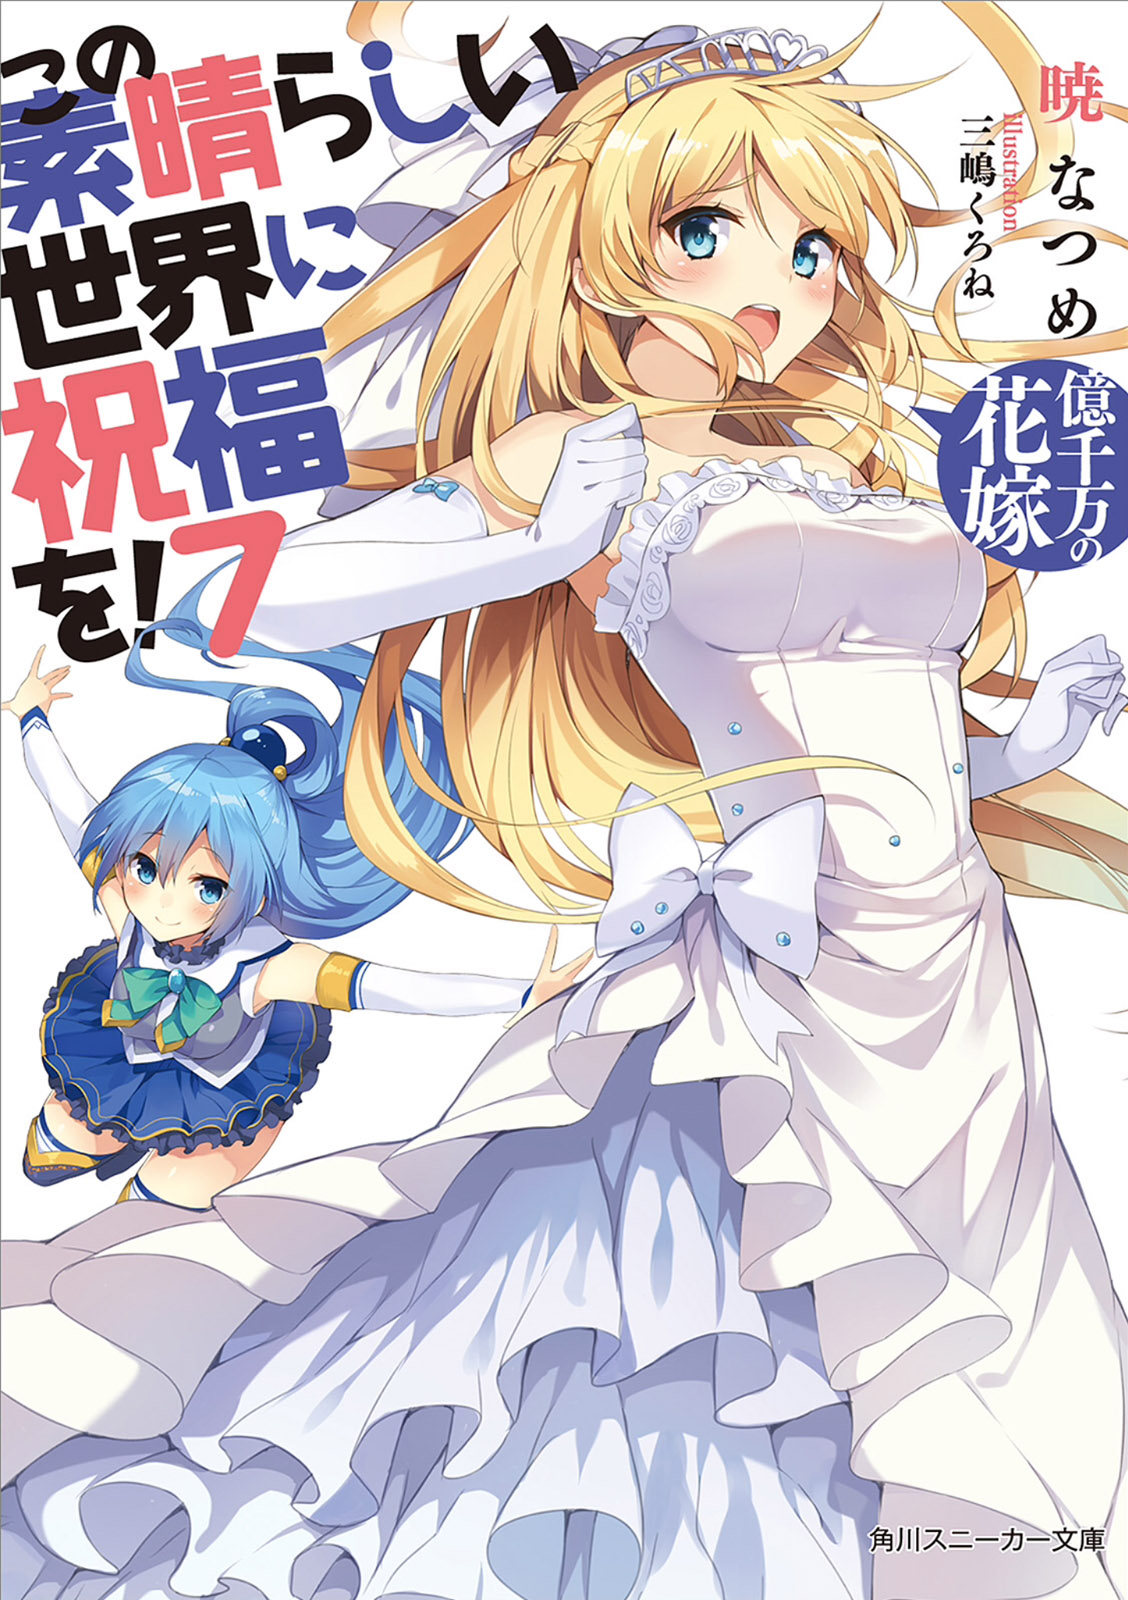 Kono Subarashii Sekai Ni Shukufuku Wo! light novel by Phobi21 on DeviantArt